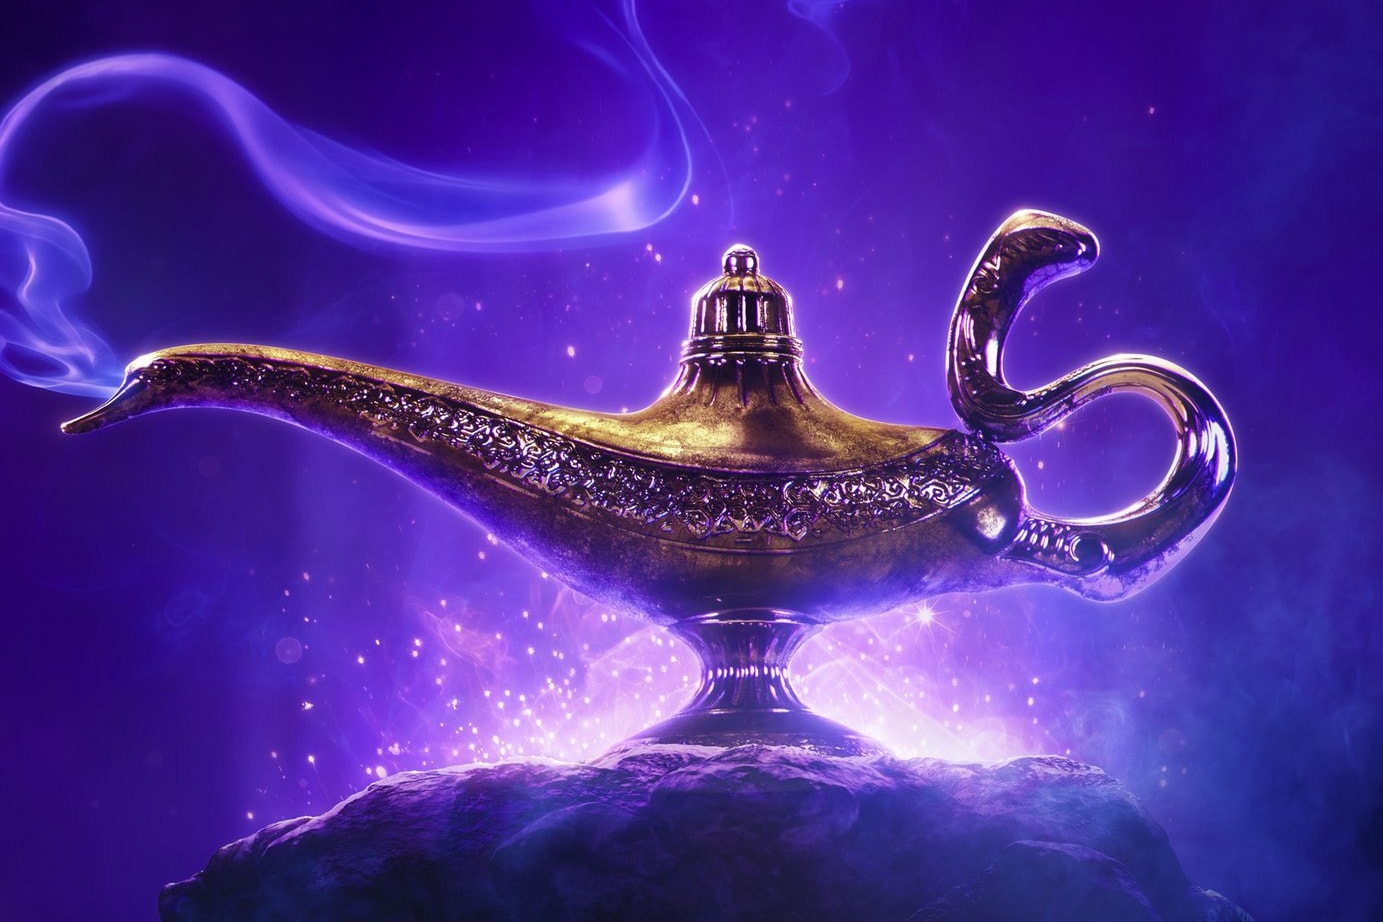 Disney 'Aladdin' Live-Action Movie Poster will smith the genie musicial film release date may 2019 cast jasmine jafar Mena Massoud Naomi Scott